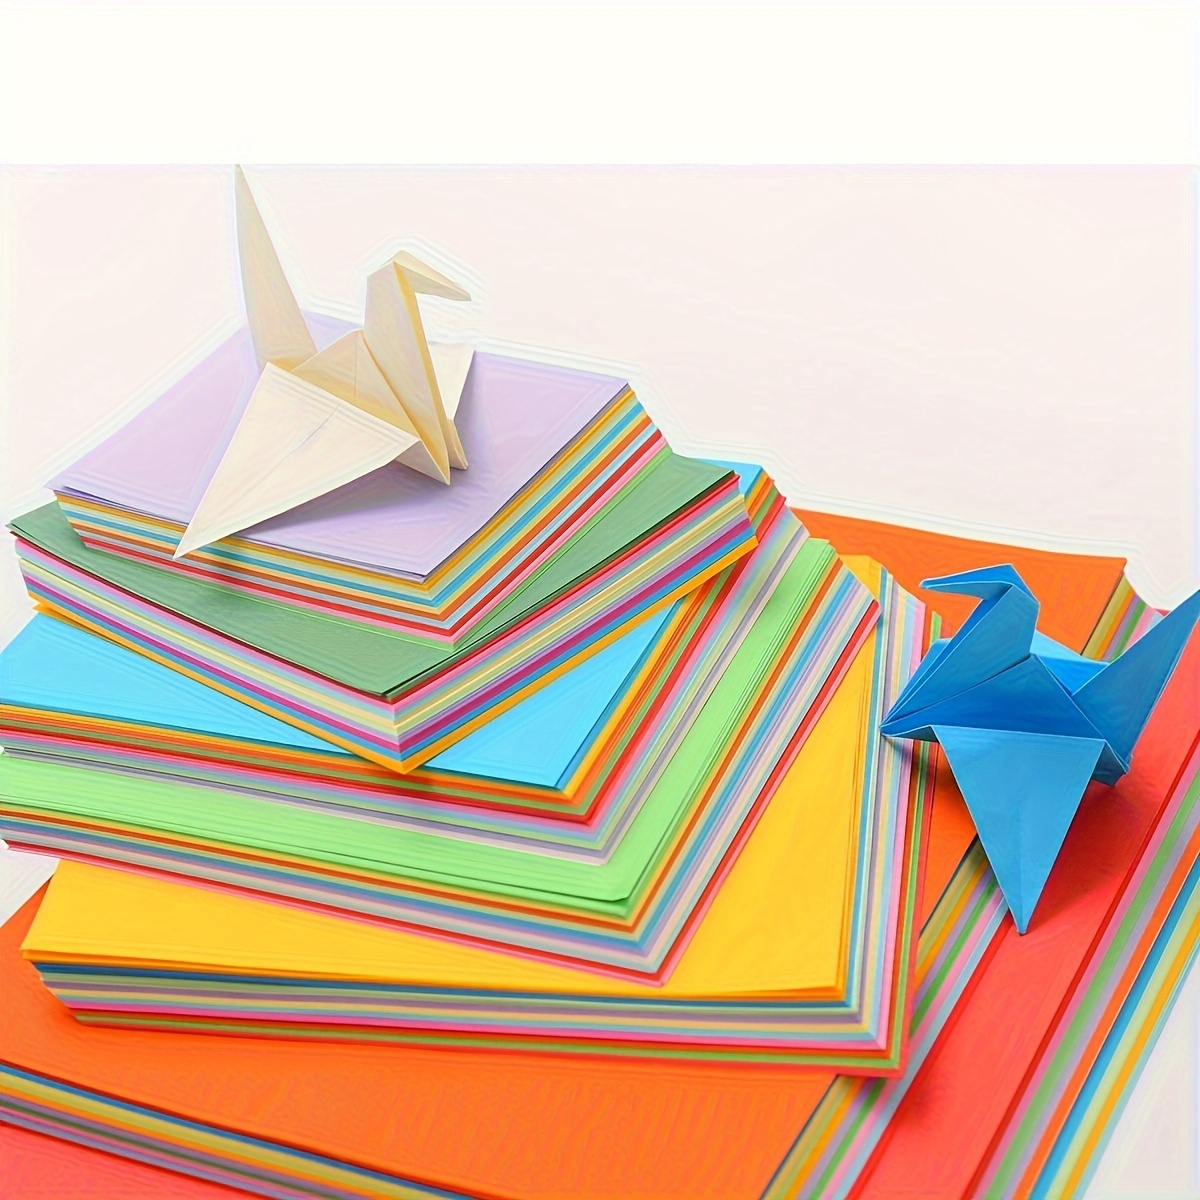 Material Paper - Hard Cardboard Colored Paper Origami Craft Paper